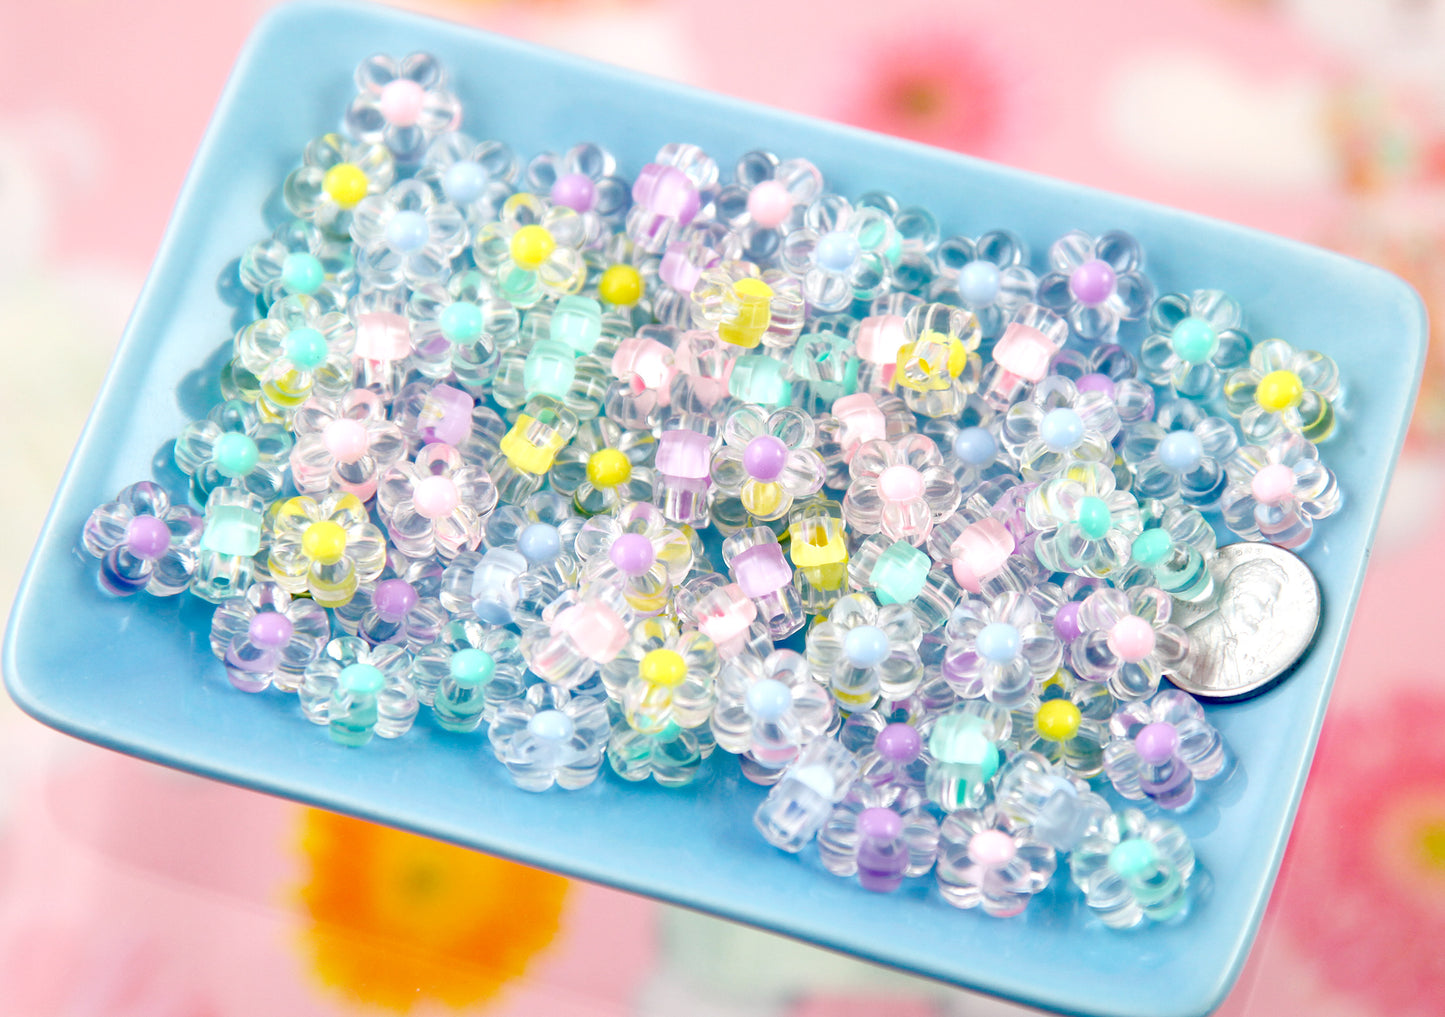 Acrylic Flower Beads - 12mm Small Pastel Transparent Acrylic Flower Beads with Inner Bead - Little Resin Flower Beads - 75 pc set